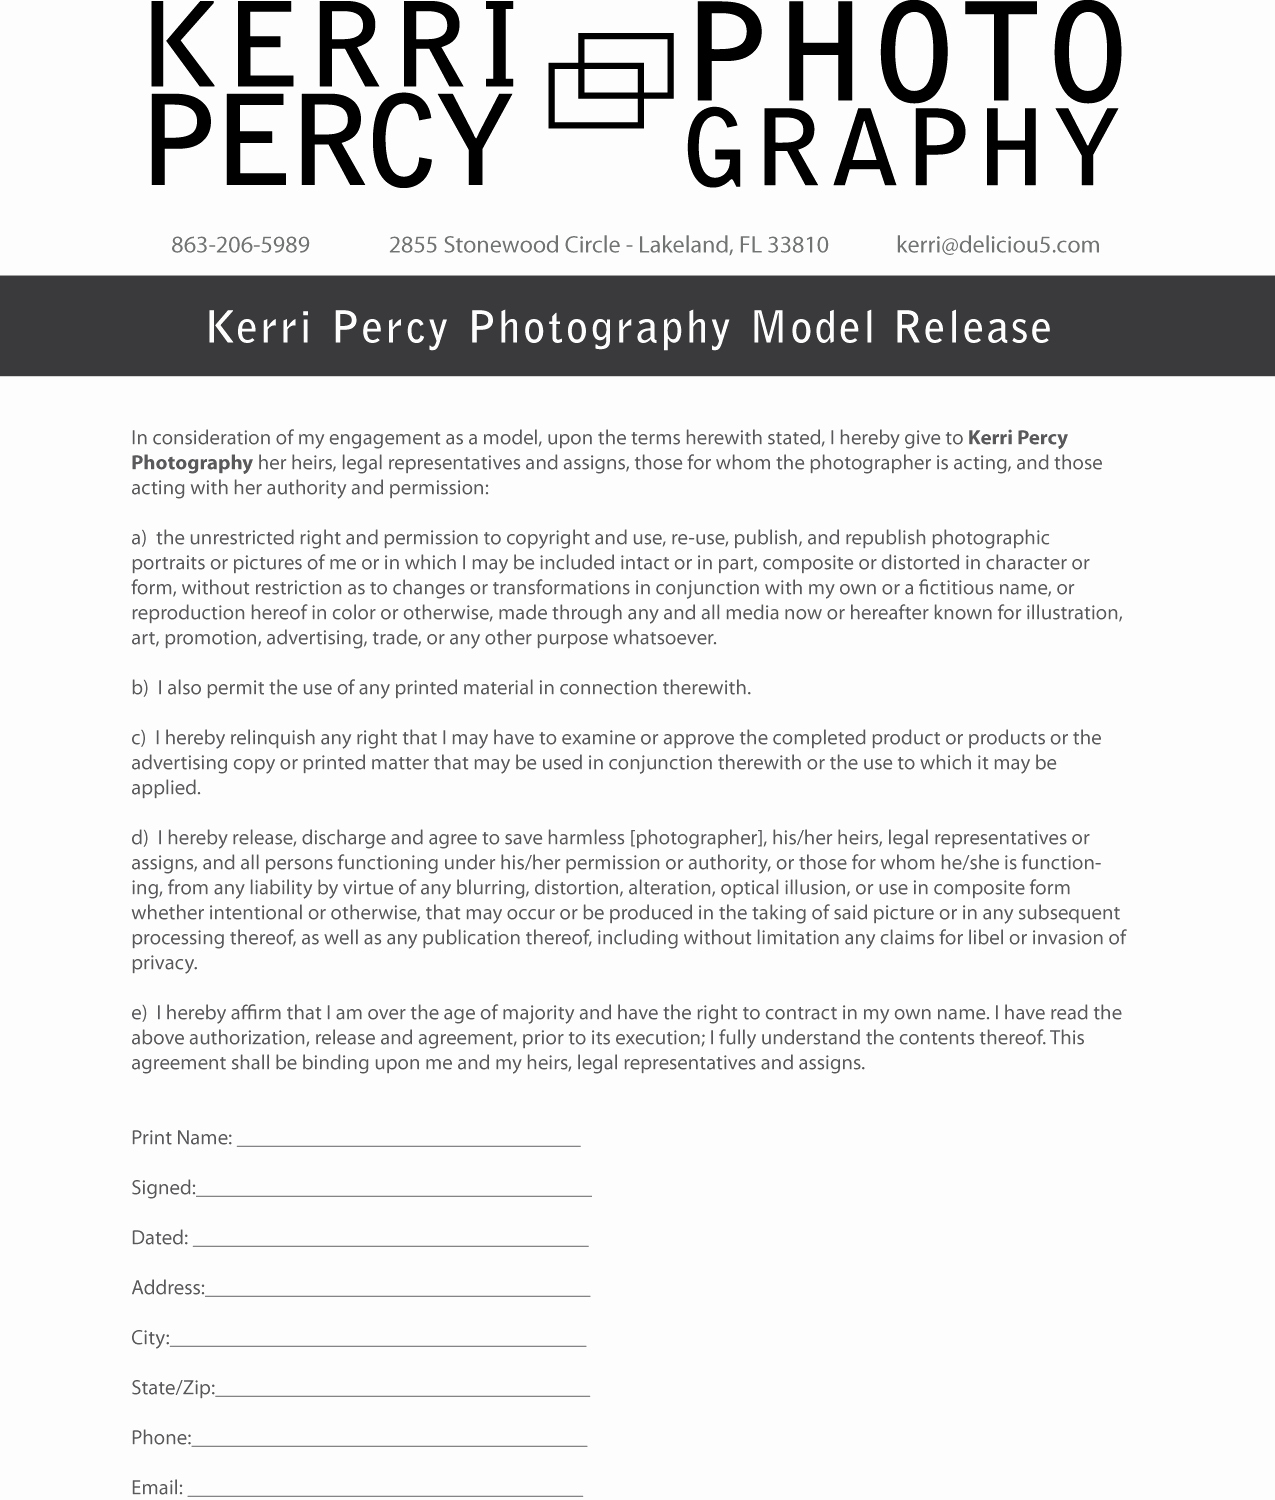 Photography Model Release form Luxury Kerri Percy Graphy Model Release